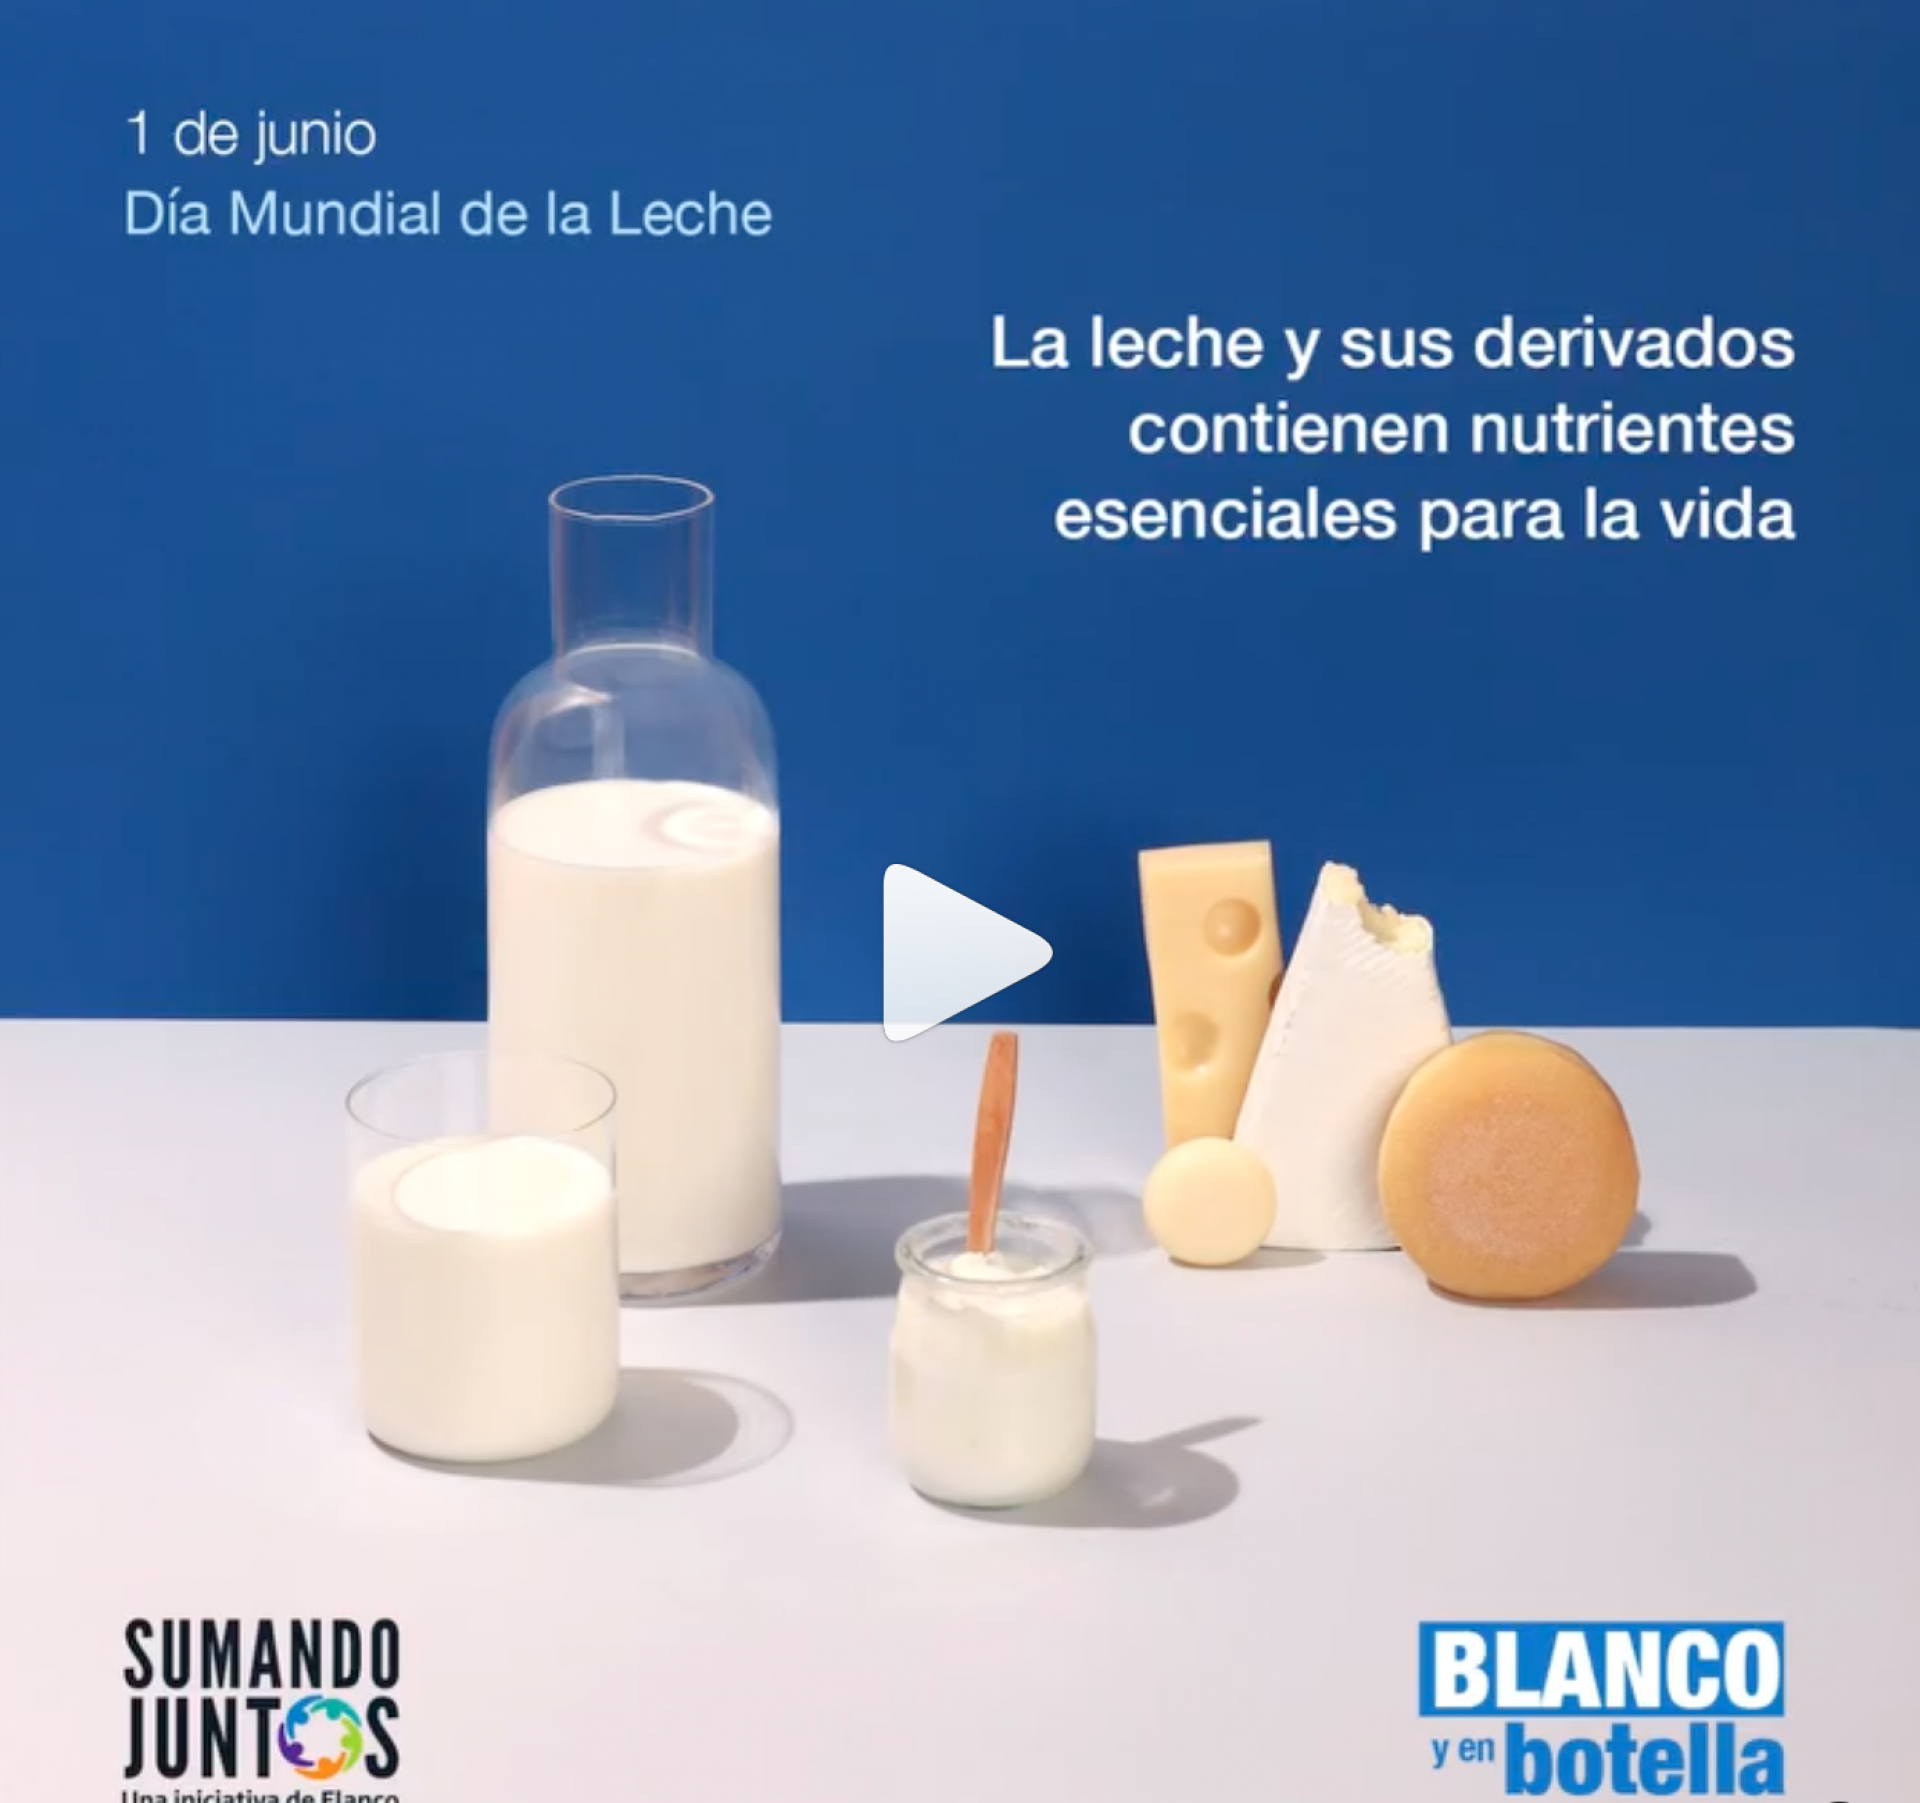 Vega Digital Awards Winner - Elanco's World Milk Day Campaign, Ulled Asociados